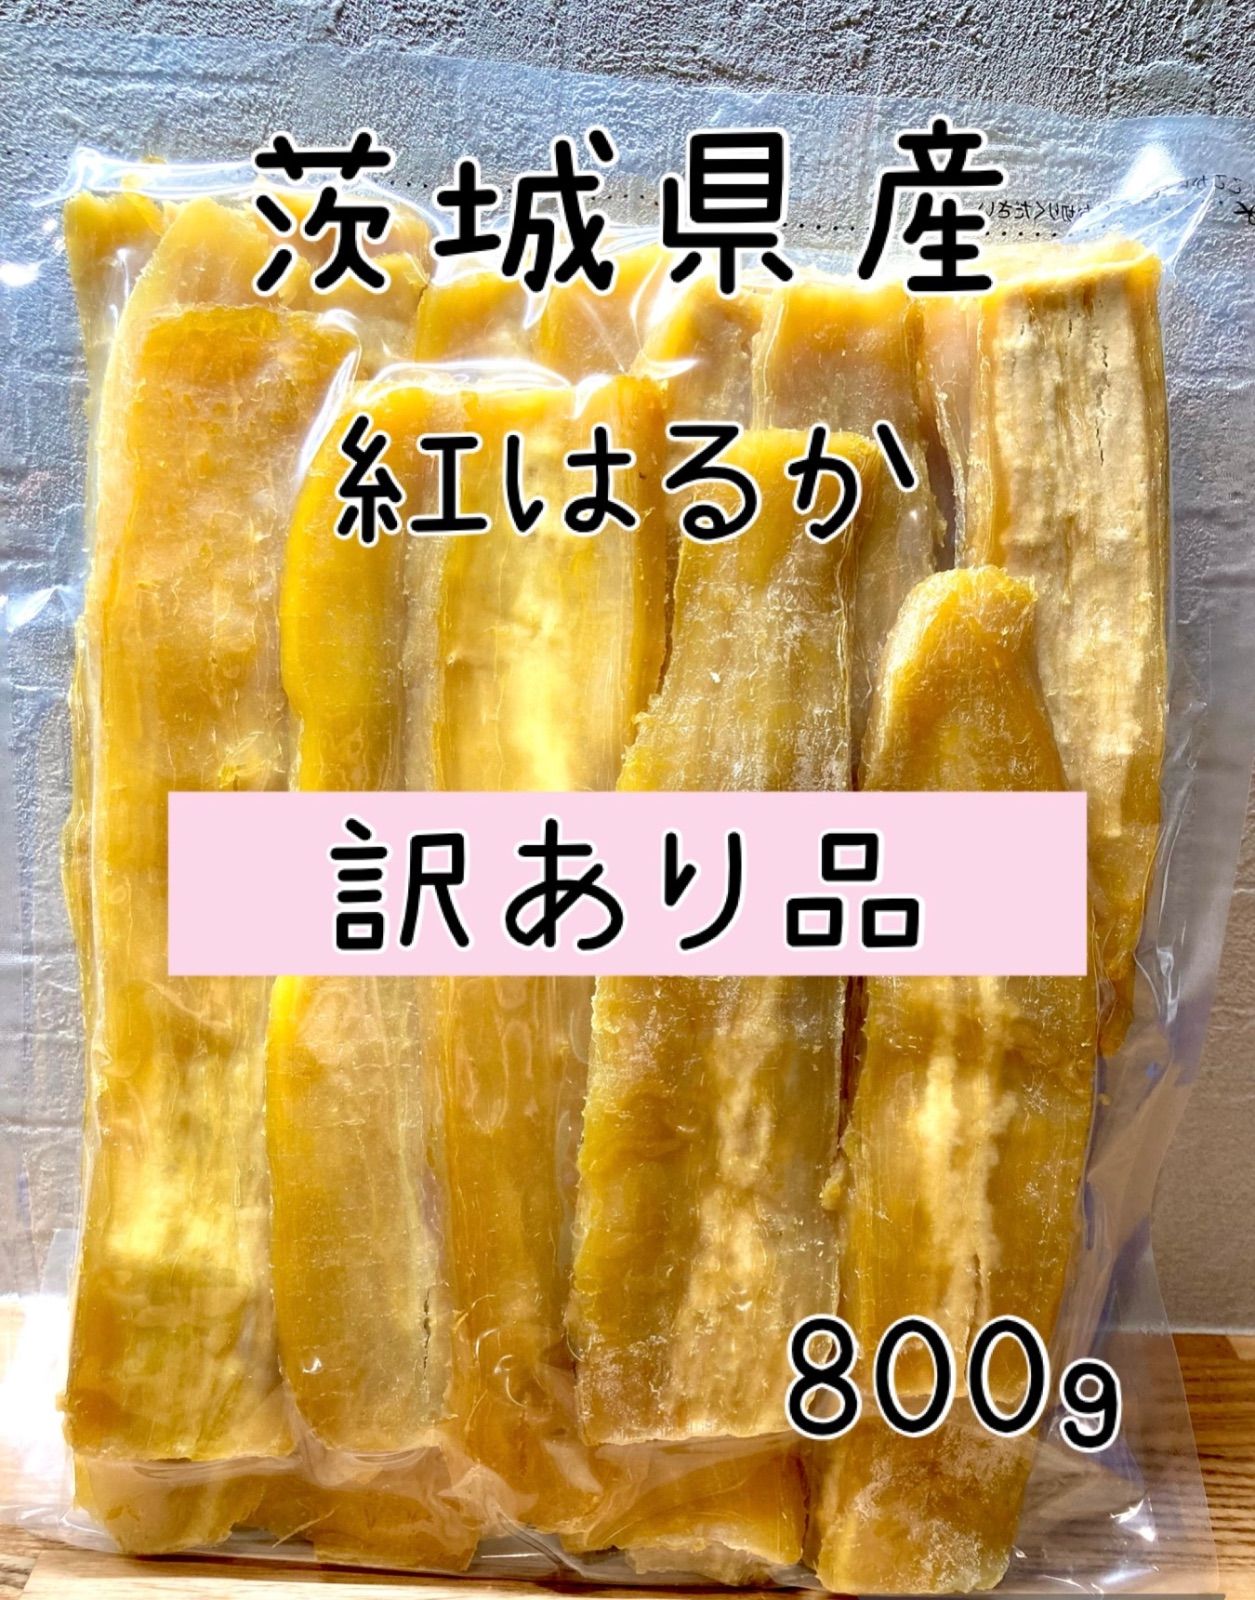 800g 干し芋 訳あり 紅はるか 茨城県産 無添加 ねっとり甘い 野菜 通販